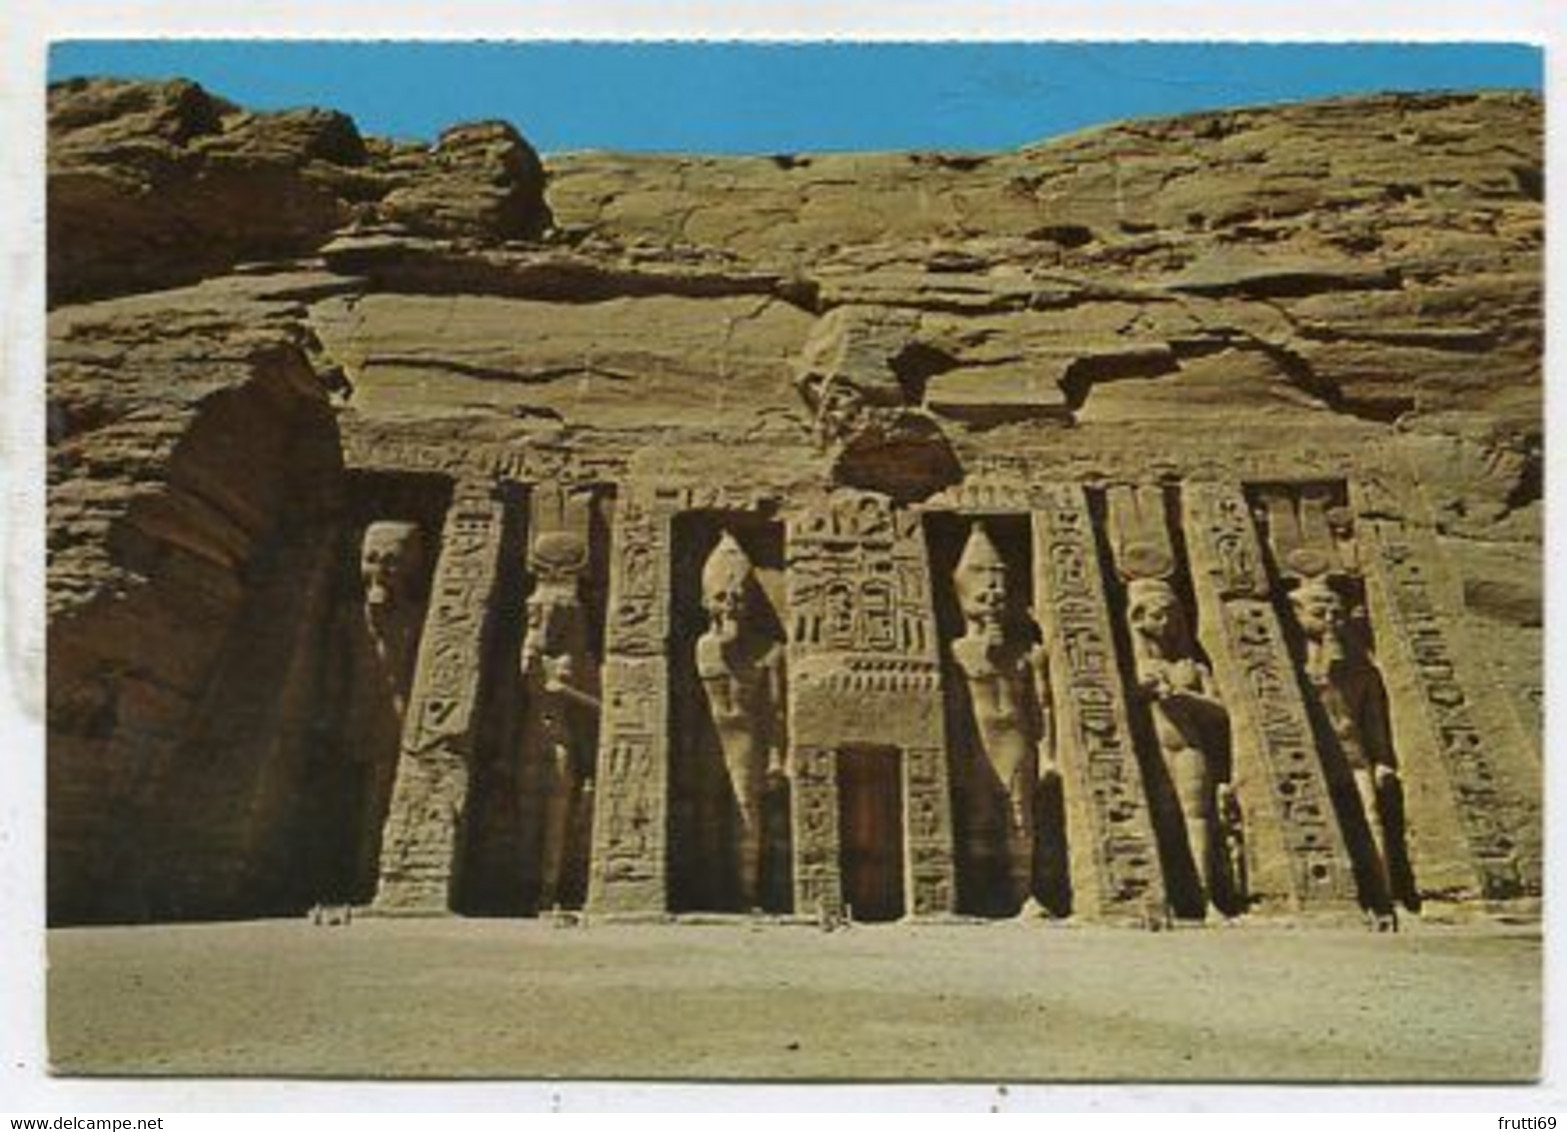 AK 102230 EGYPT - Abu Simbel - Small Rock Temple - Temples D'Abou Simbel